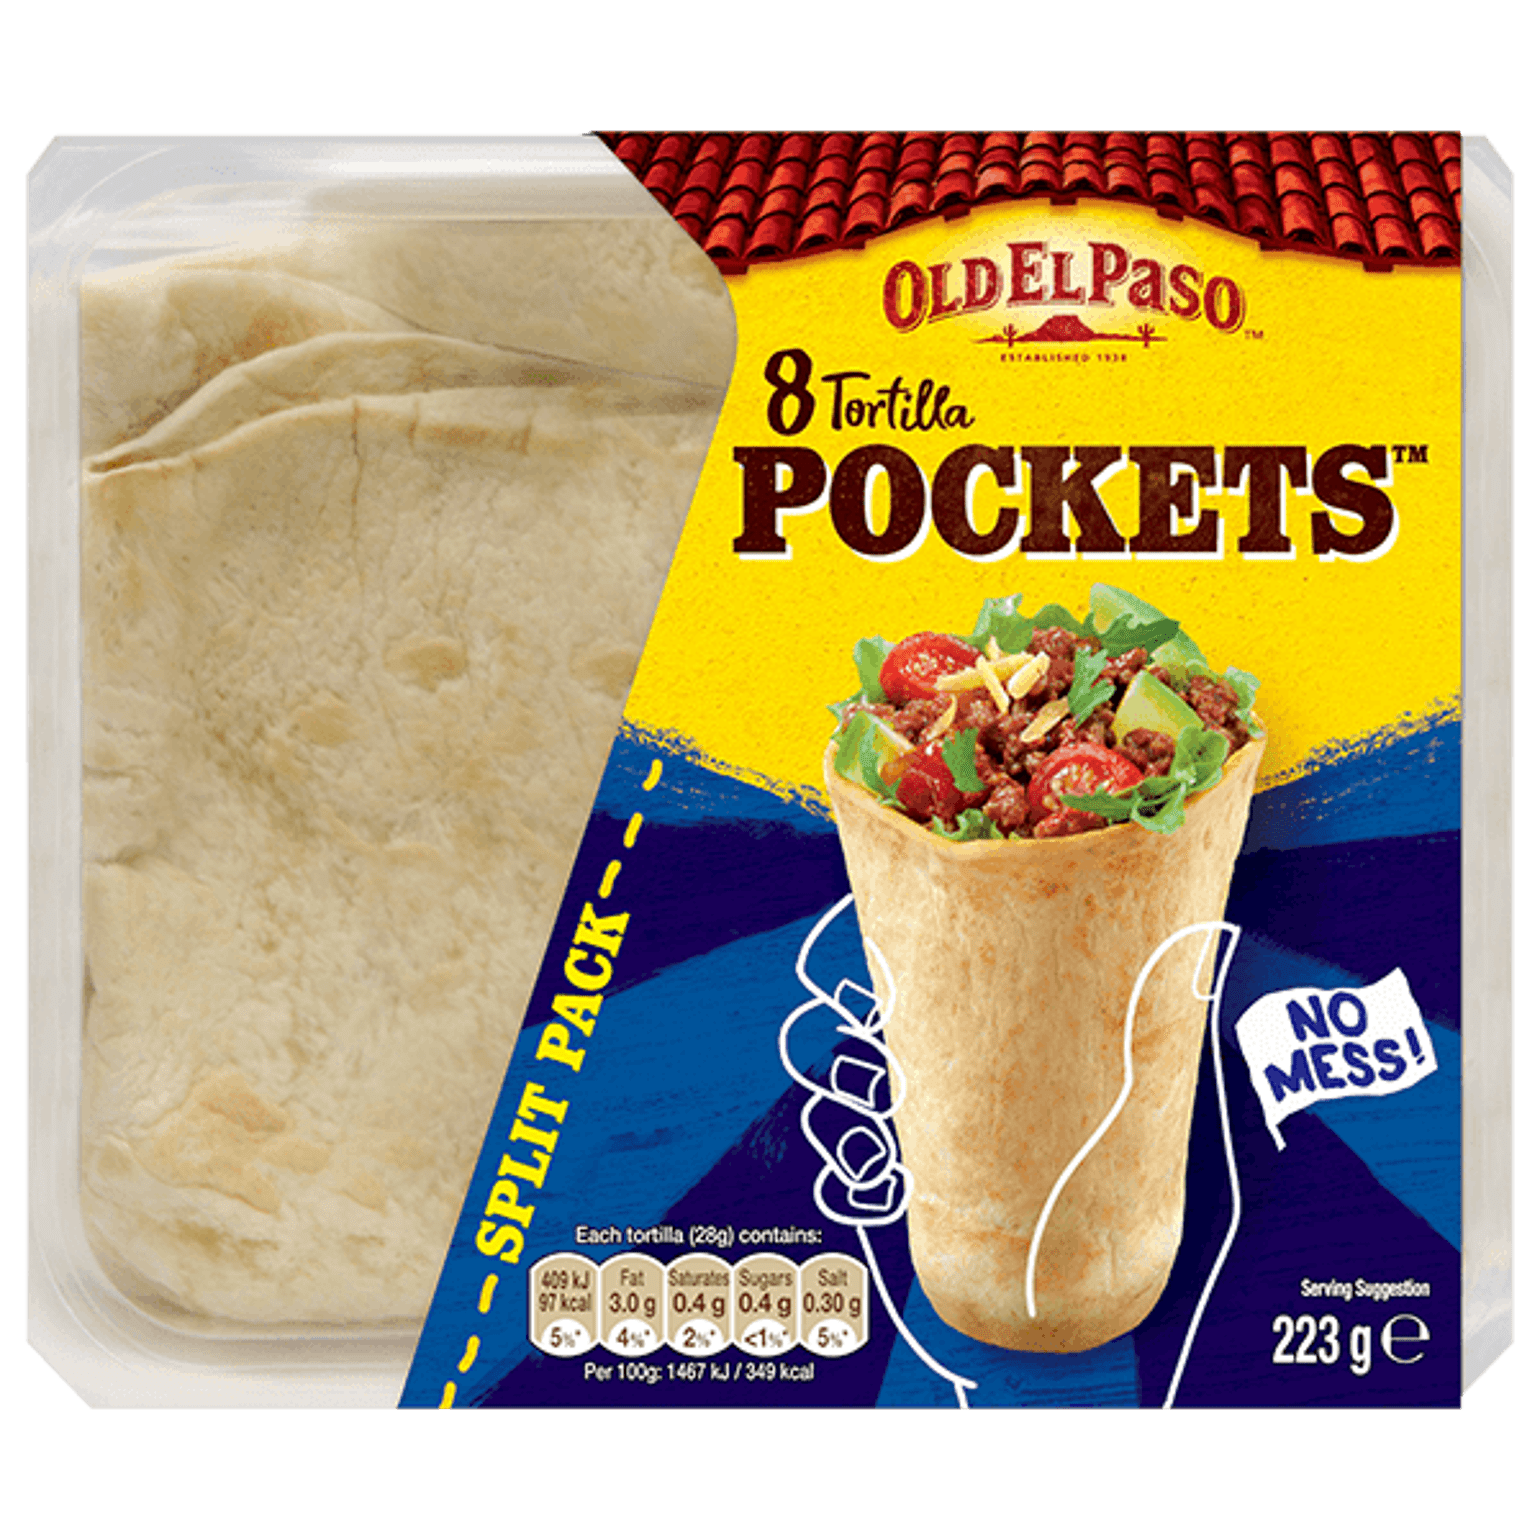 pack of Old El Paso's 8 tortilla pockets (223g)